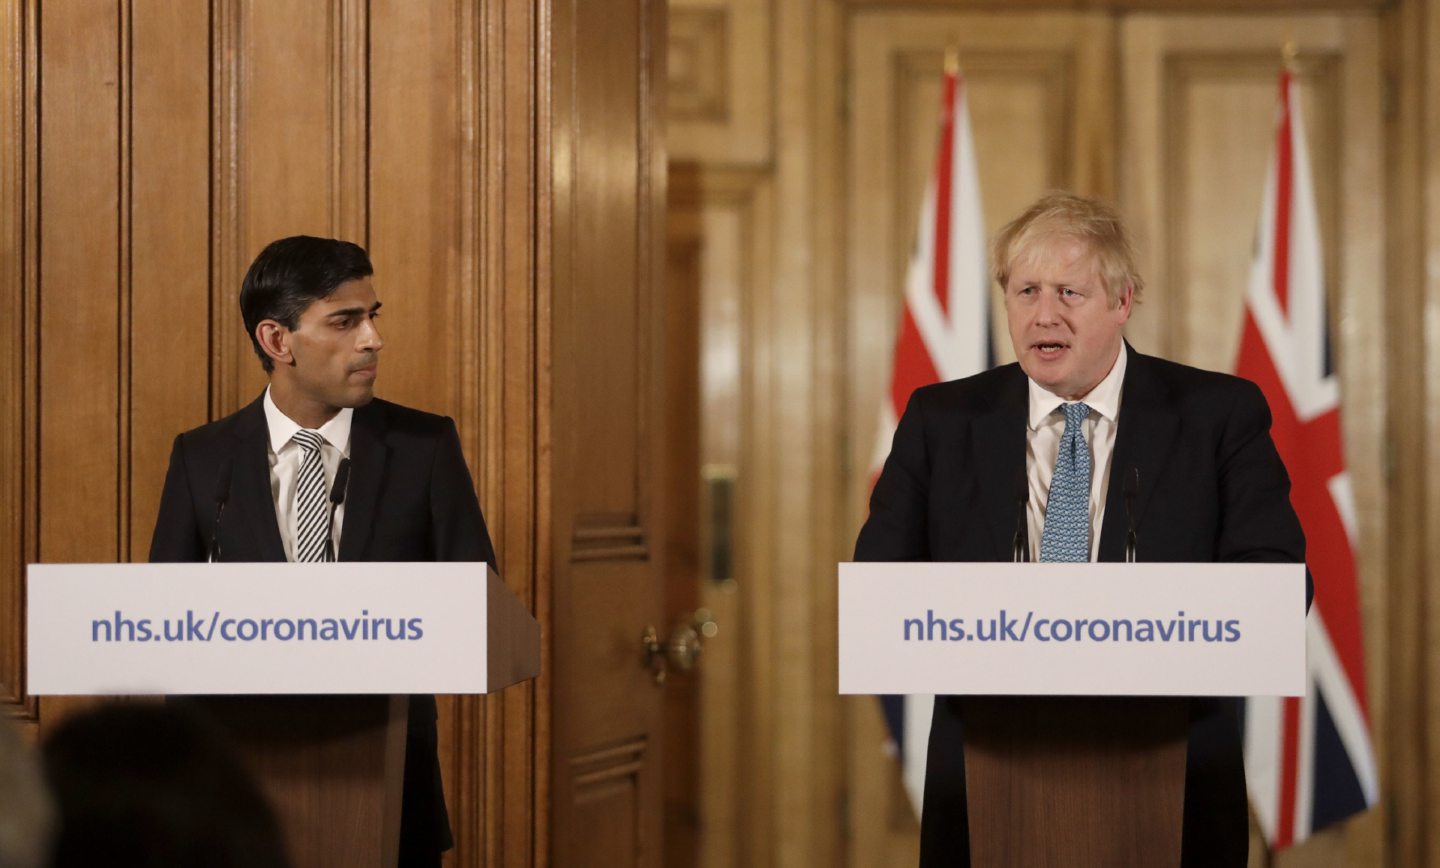 Prime Minister Boris Johnson, with Chancellor Rishi Sunak, speaking at a media briefing in Downing Street, London, on Coronavirus.